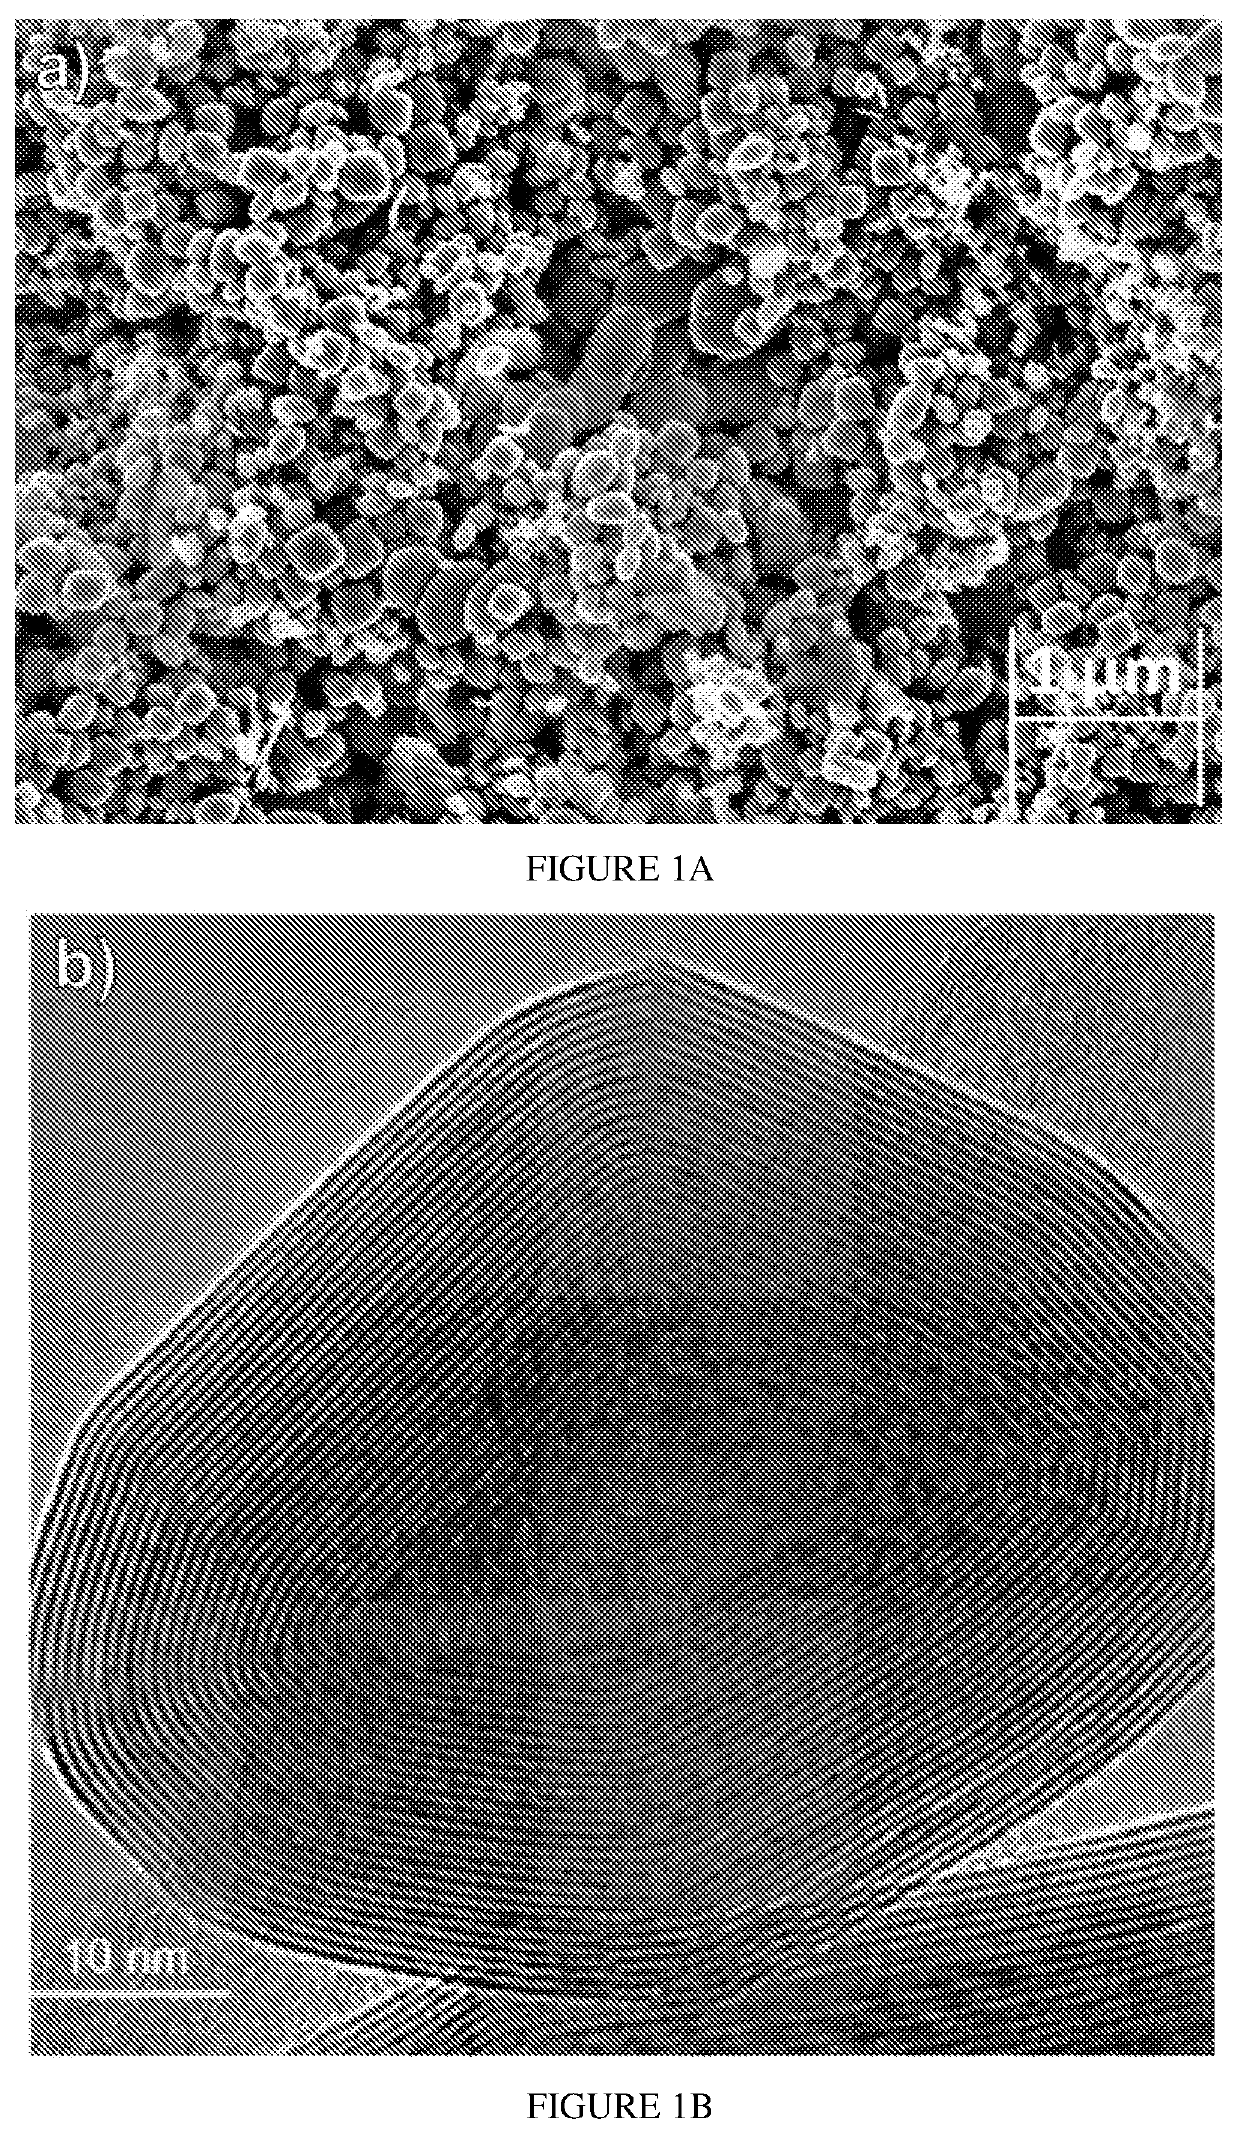 Hydroxyapatite based composition and film thereof comprising inorganic fullerene-like nanoparticles or inorganic nanotubes